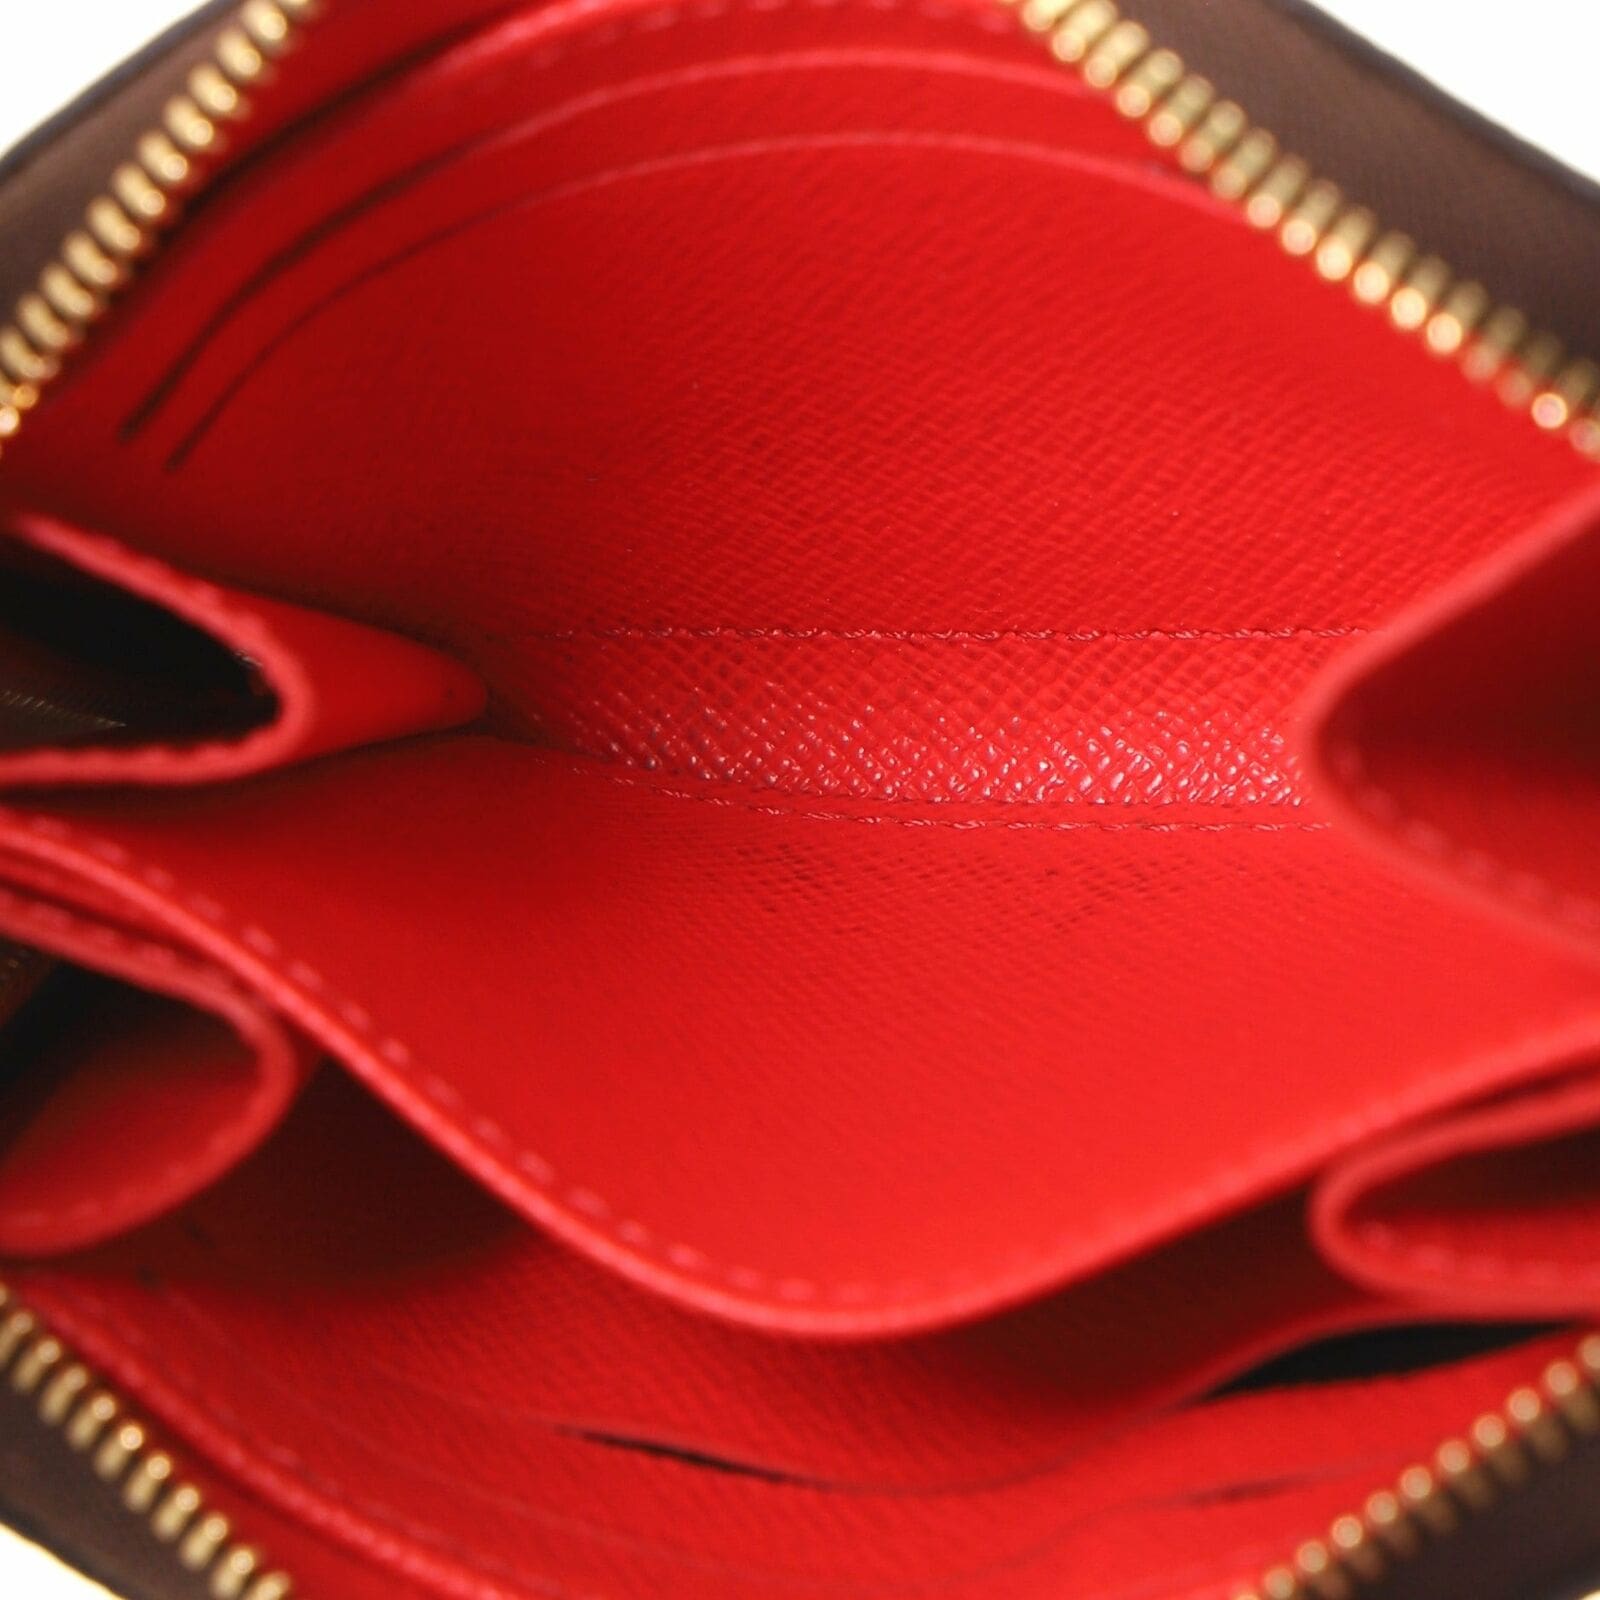 RvceShops Revival  roundup of Louis Vuitton monogram wallets